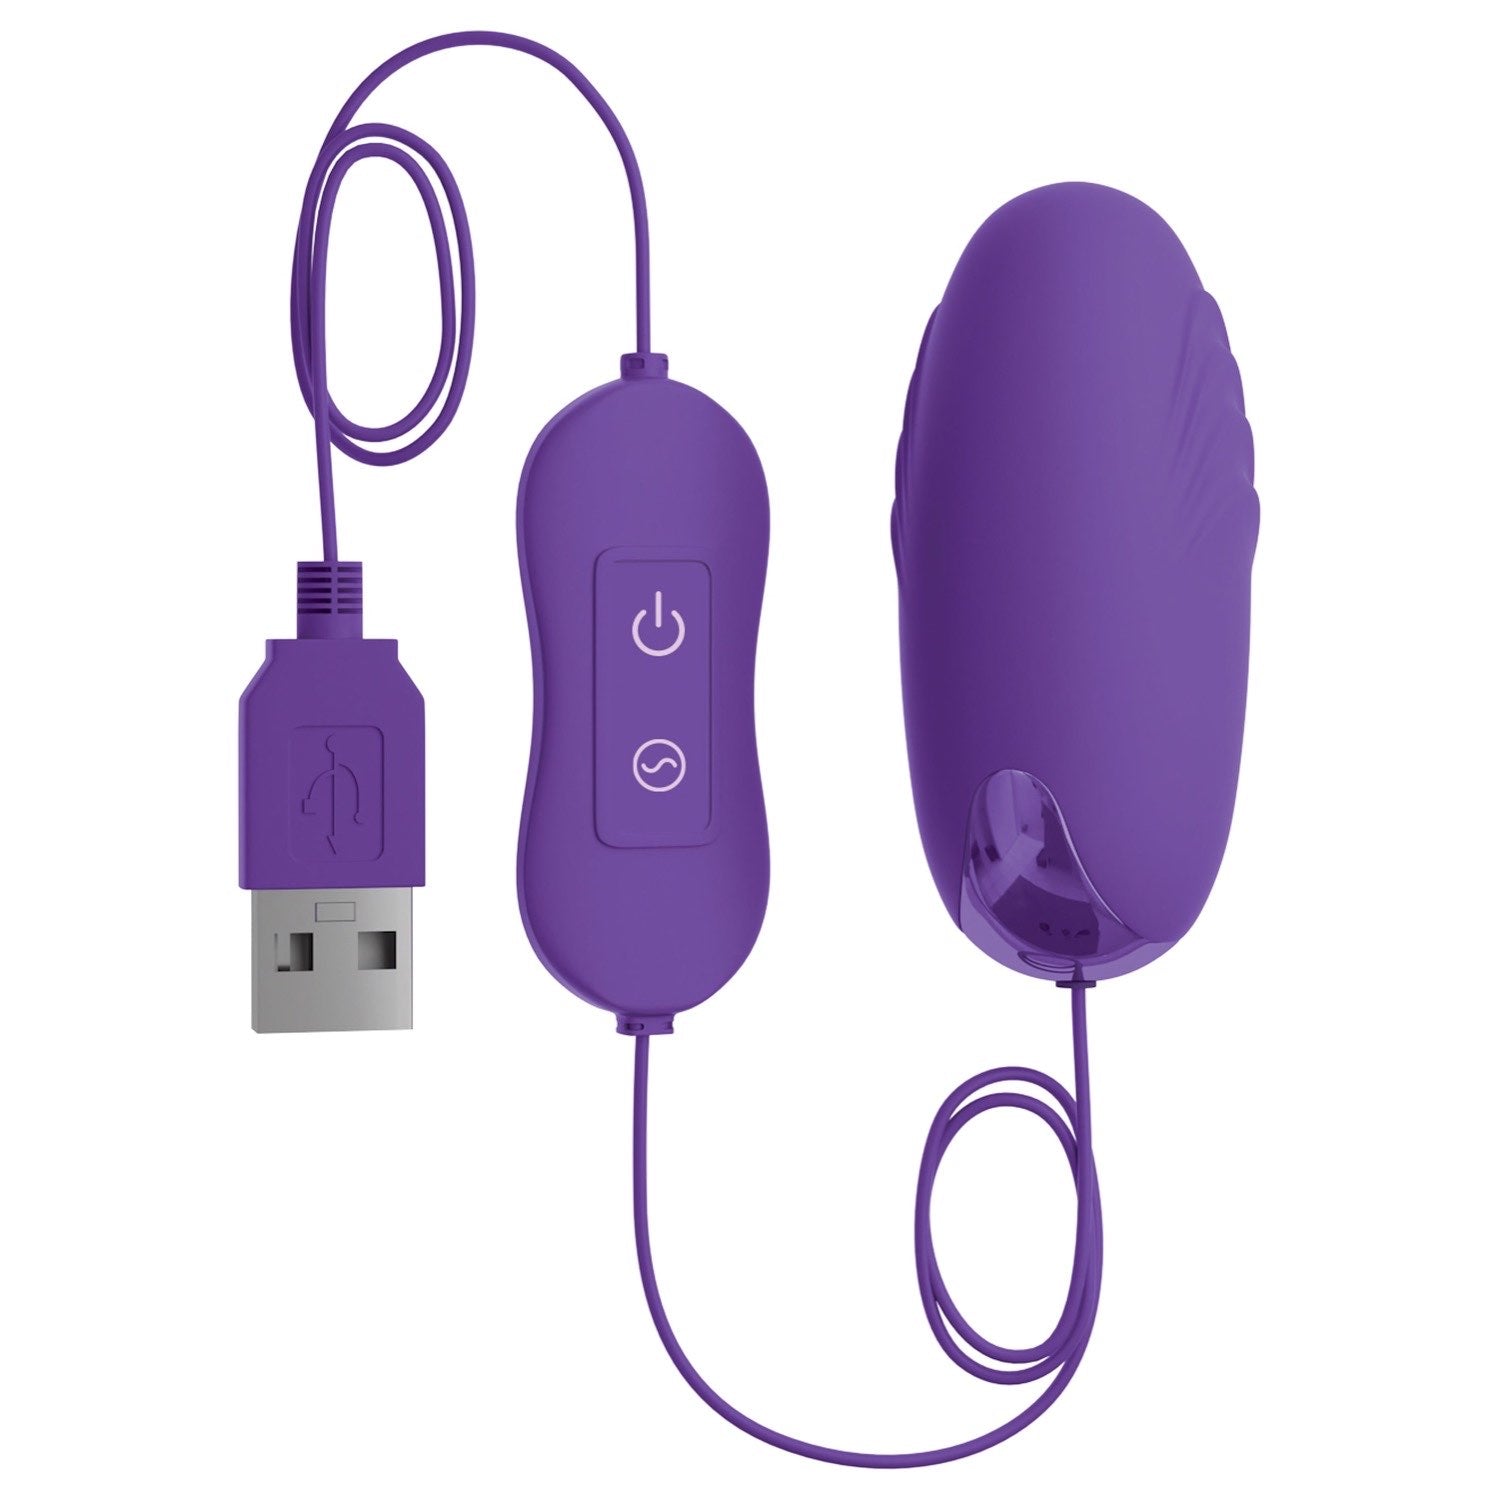 我的天啊！ 我的天啊！ Bullets #Happy - 紫色 USB 供电子弹头 by Pipedream